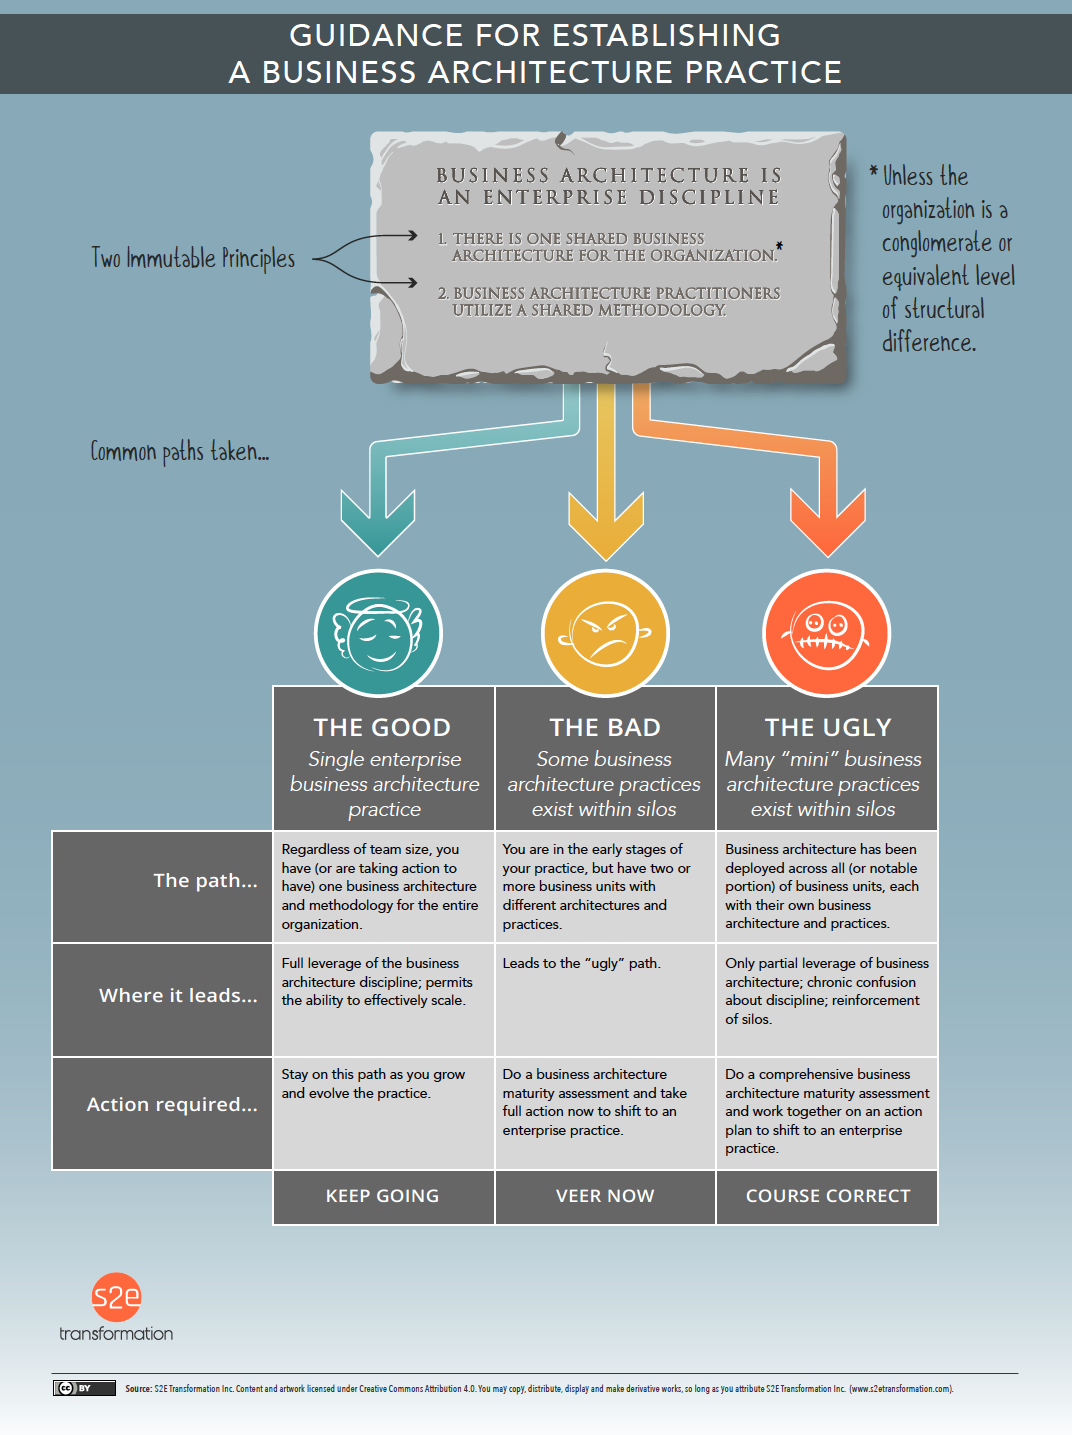 Guidance for establising business architecture practice diagram